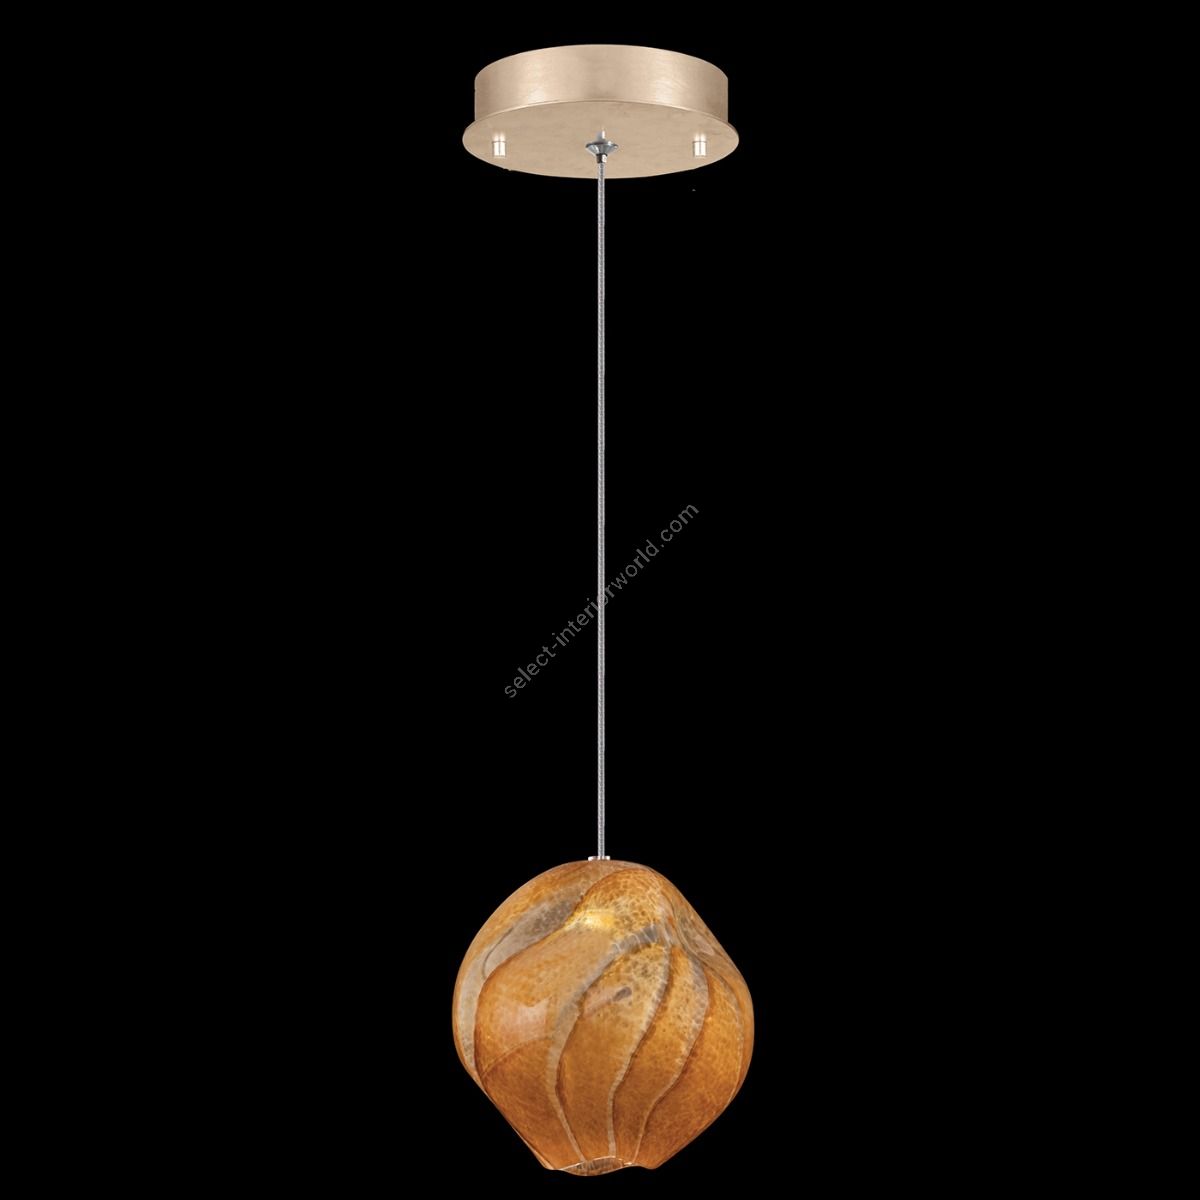 Vesta 6.5″ Round Drop Light 866140 by Fine Art Handcrafted Lighting